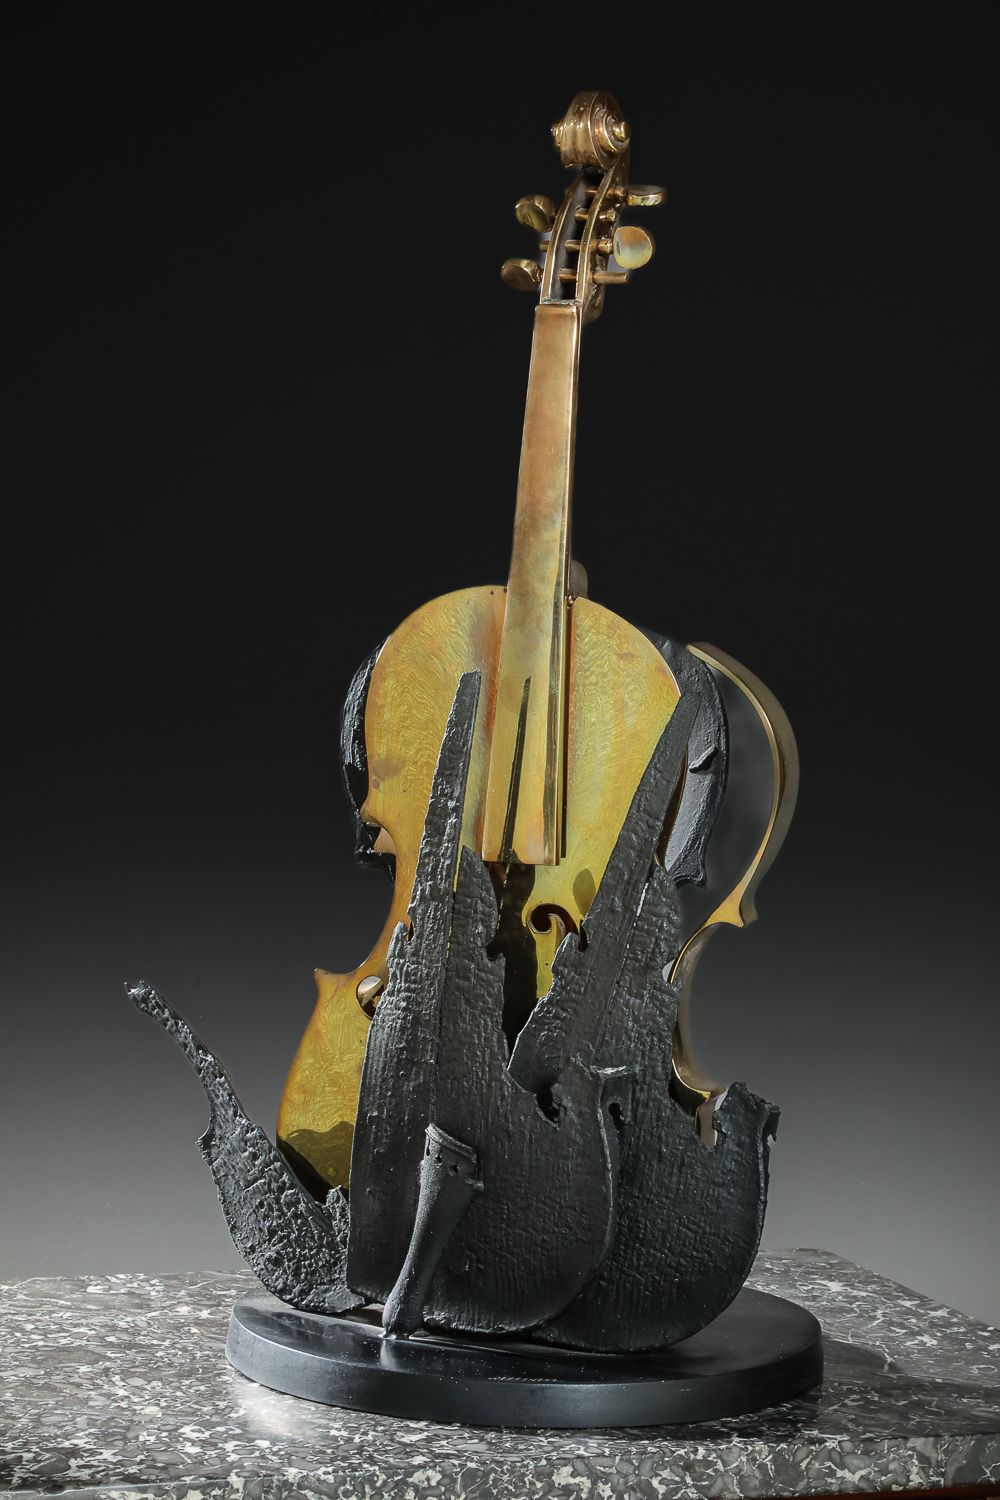 Null 阿尔曼 (1928-2005)
小提琴
雕塑，铜版画，有金色和黑色的铜锈
多次签名并编号为34/100，铸造厂BOCQUEL

尺寸 62x35CM